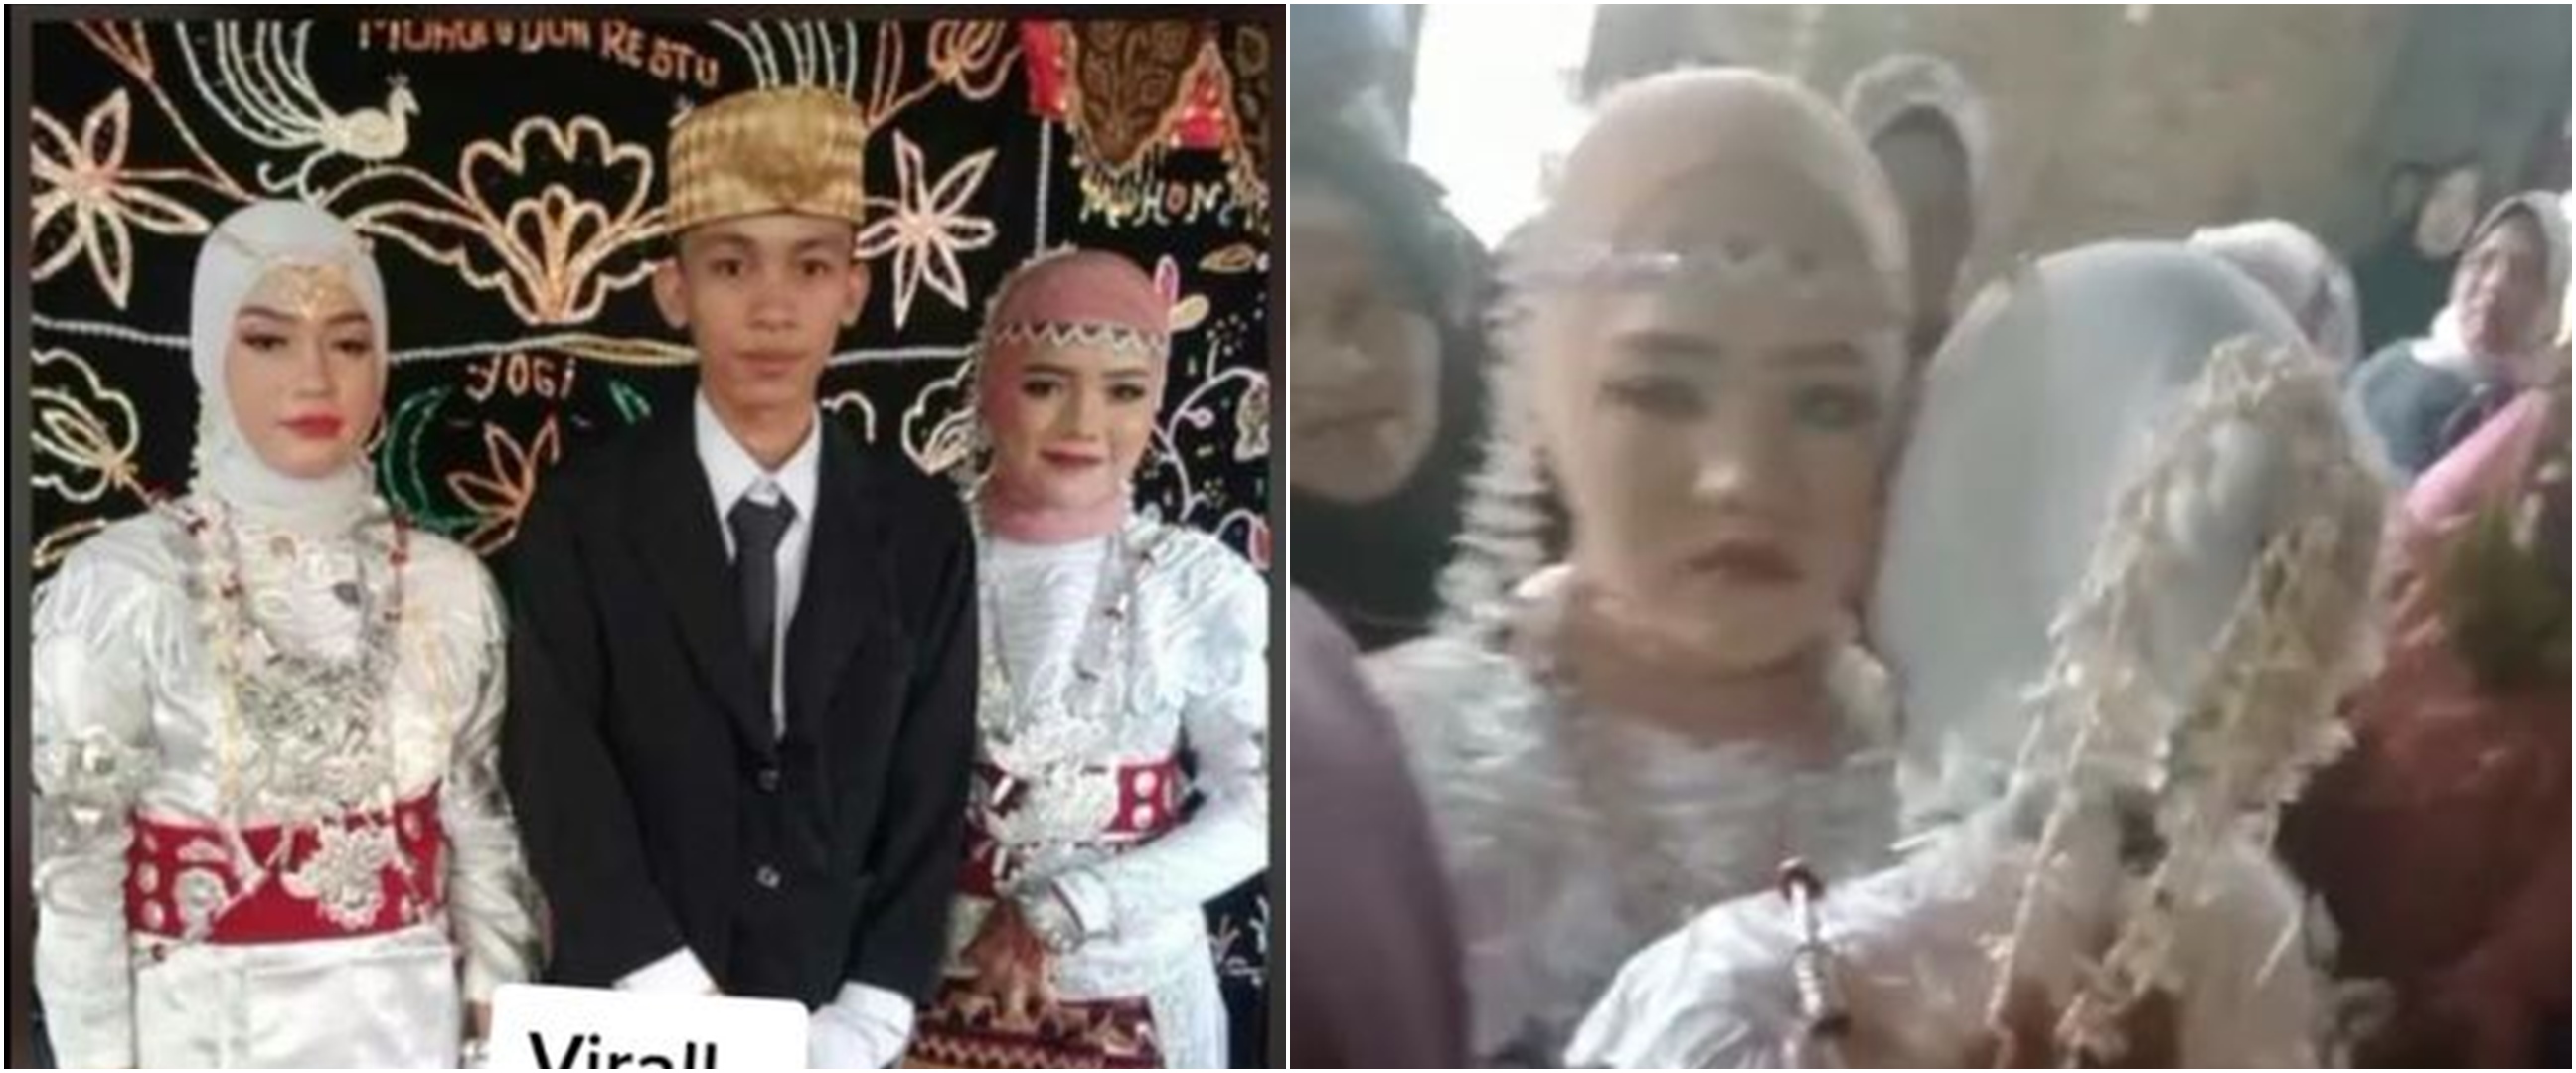 Pemuda ini nikahi dua gadis di Lampung, mempelai wanita masih sepupu